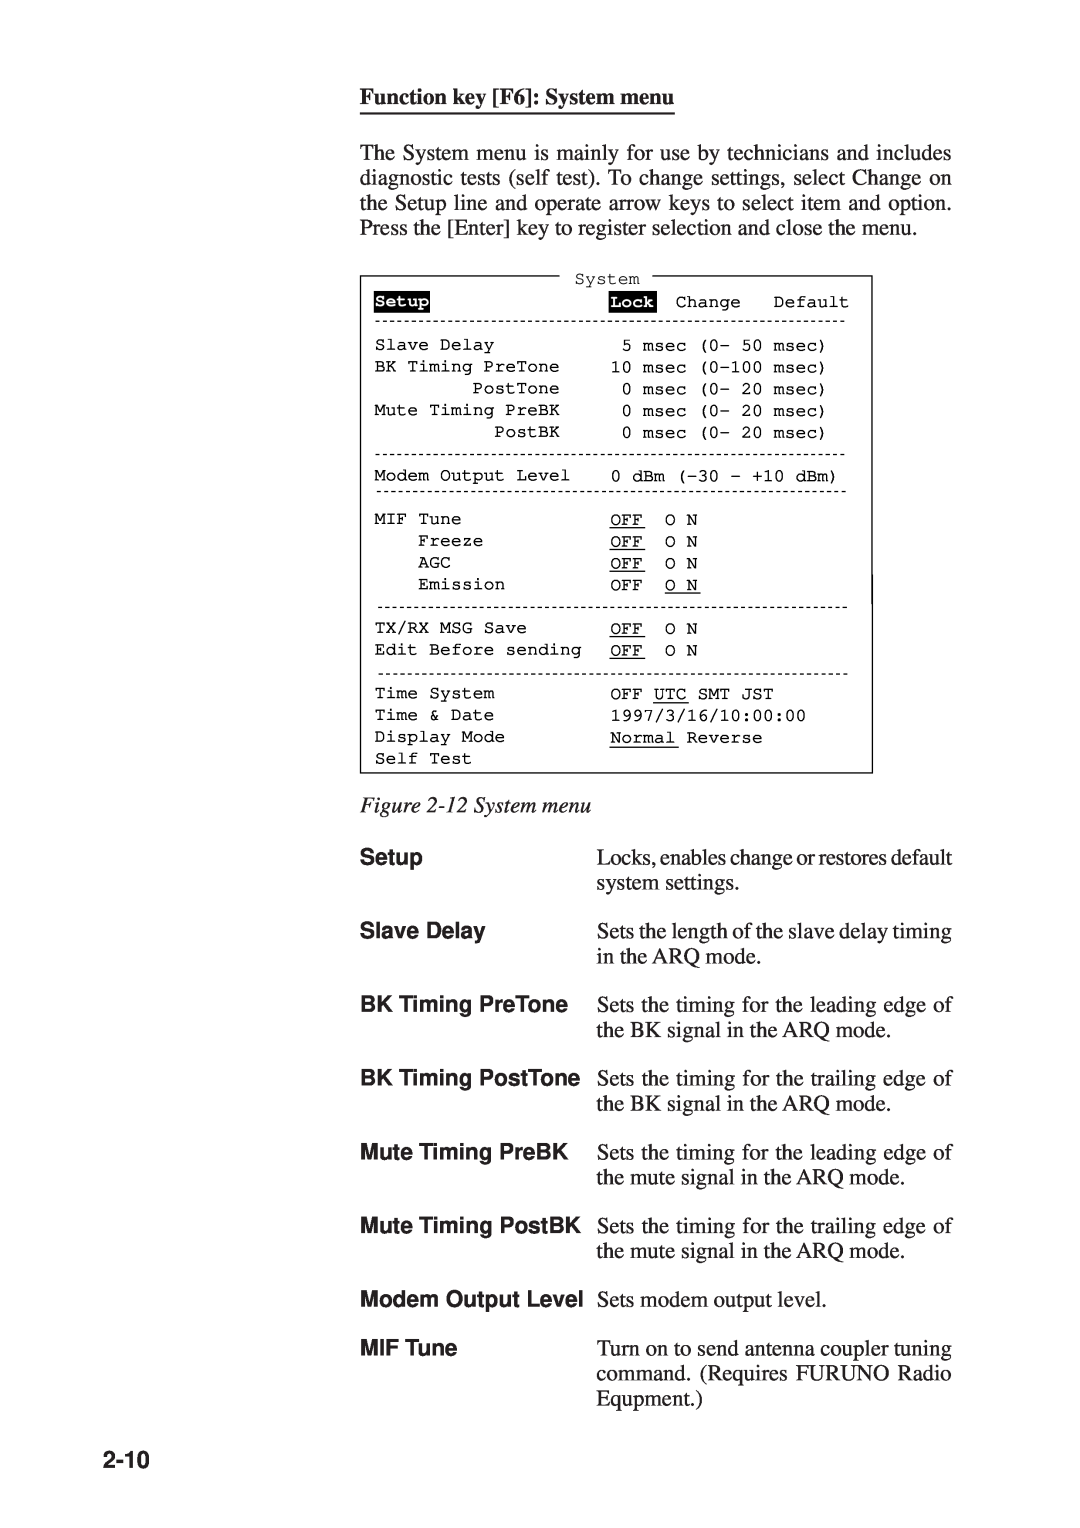 Furuno RC-1500-1T Function key F6 System menu, Setup, Slave Delay, BK Timing PreTone, BK Timing PostTone, MIF Tune, 2-10 